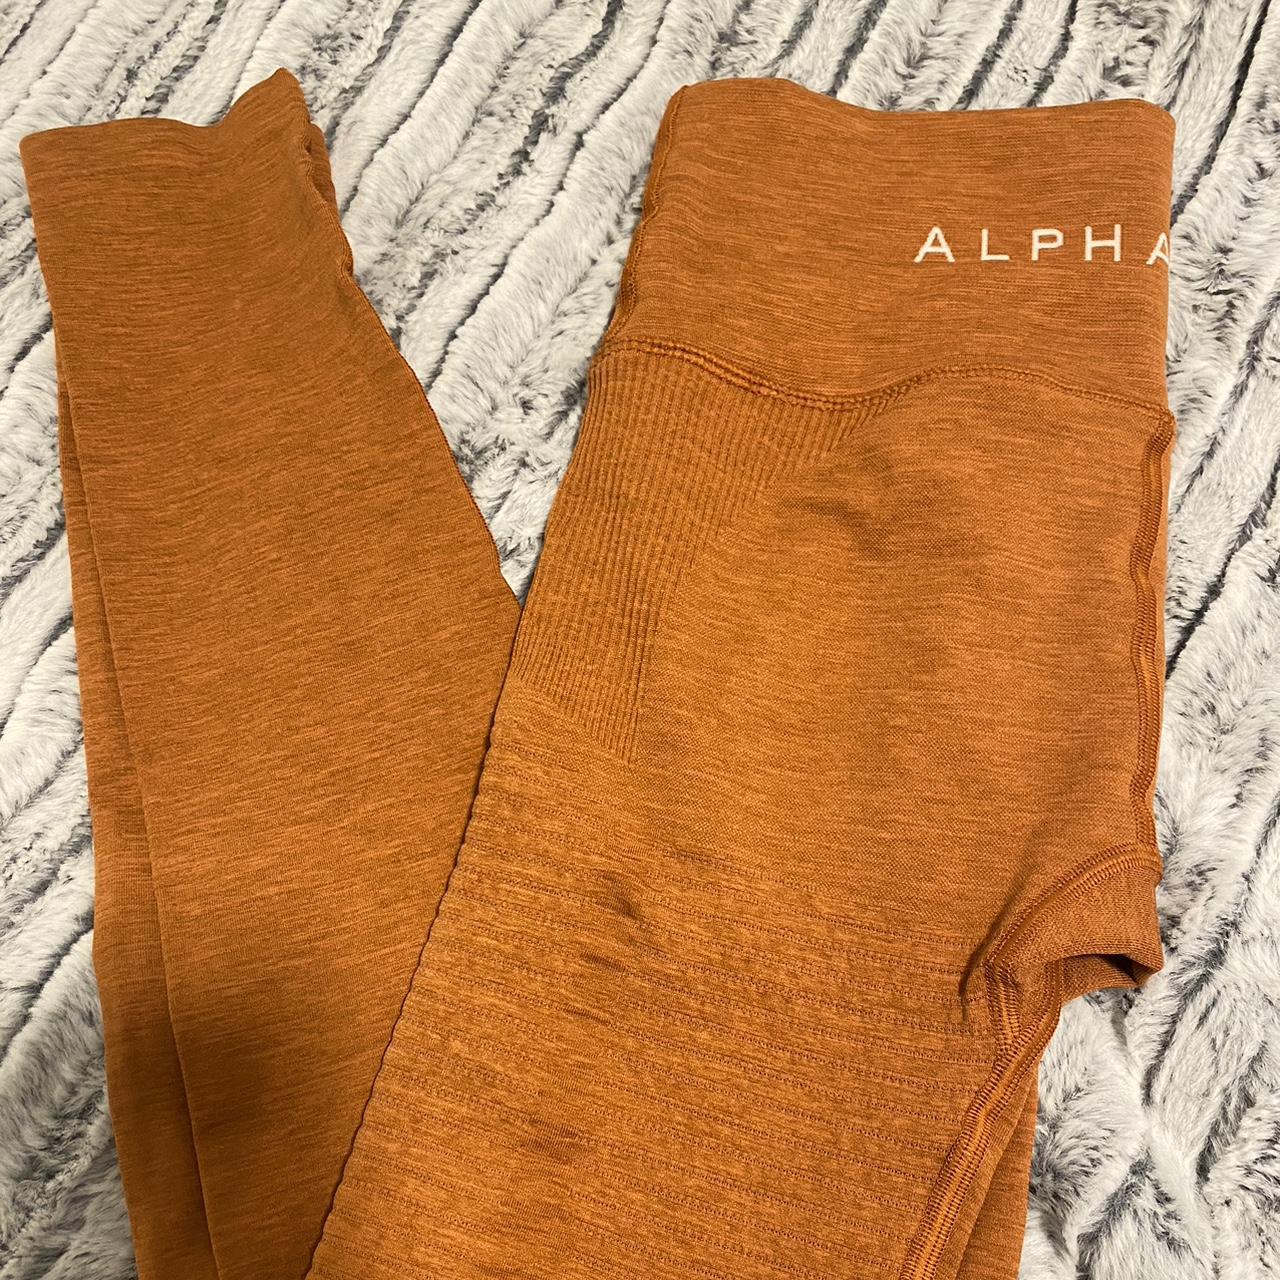 Alphalete leggings Size medium Good condition! - Depop